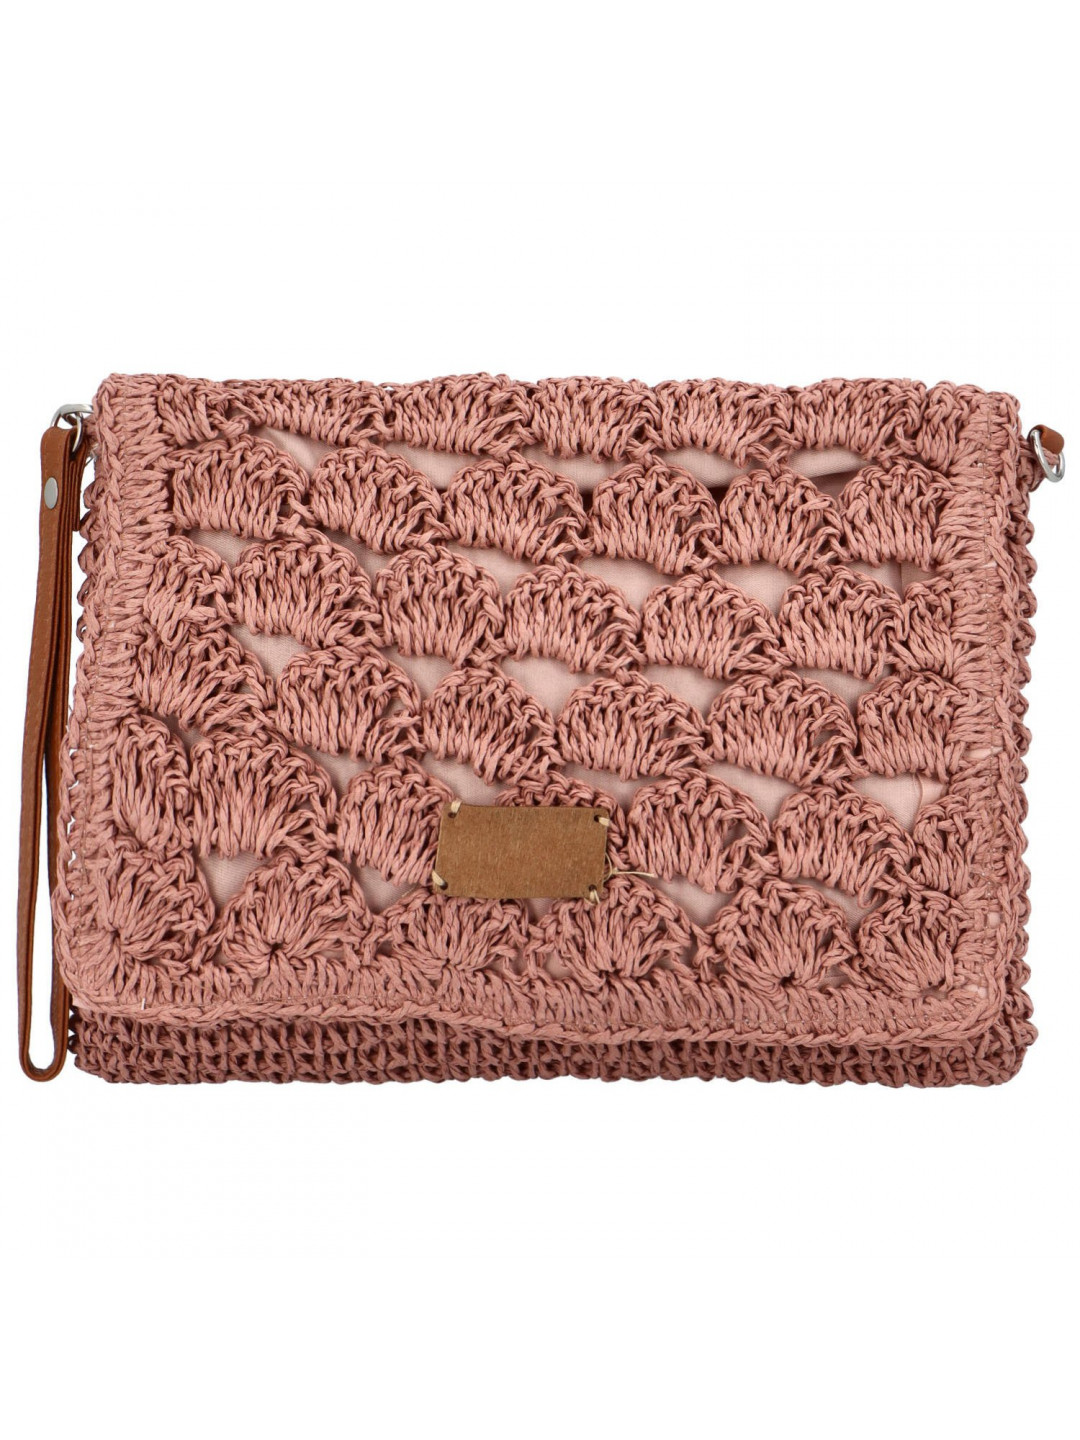 Měkká kabelka do ruky s pleteným vzorem Vivalo růžová